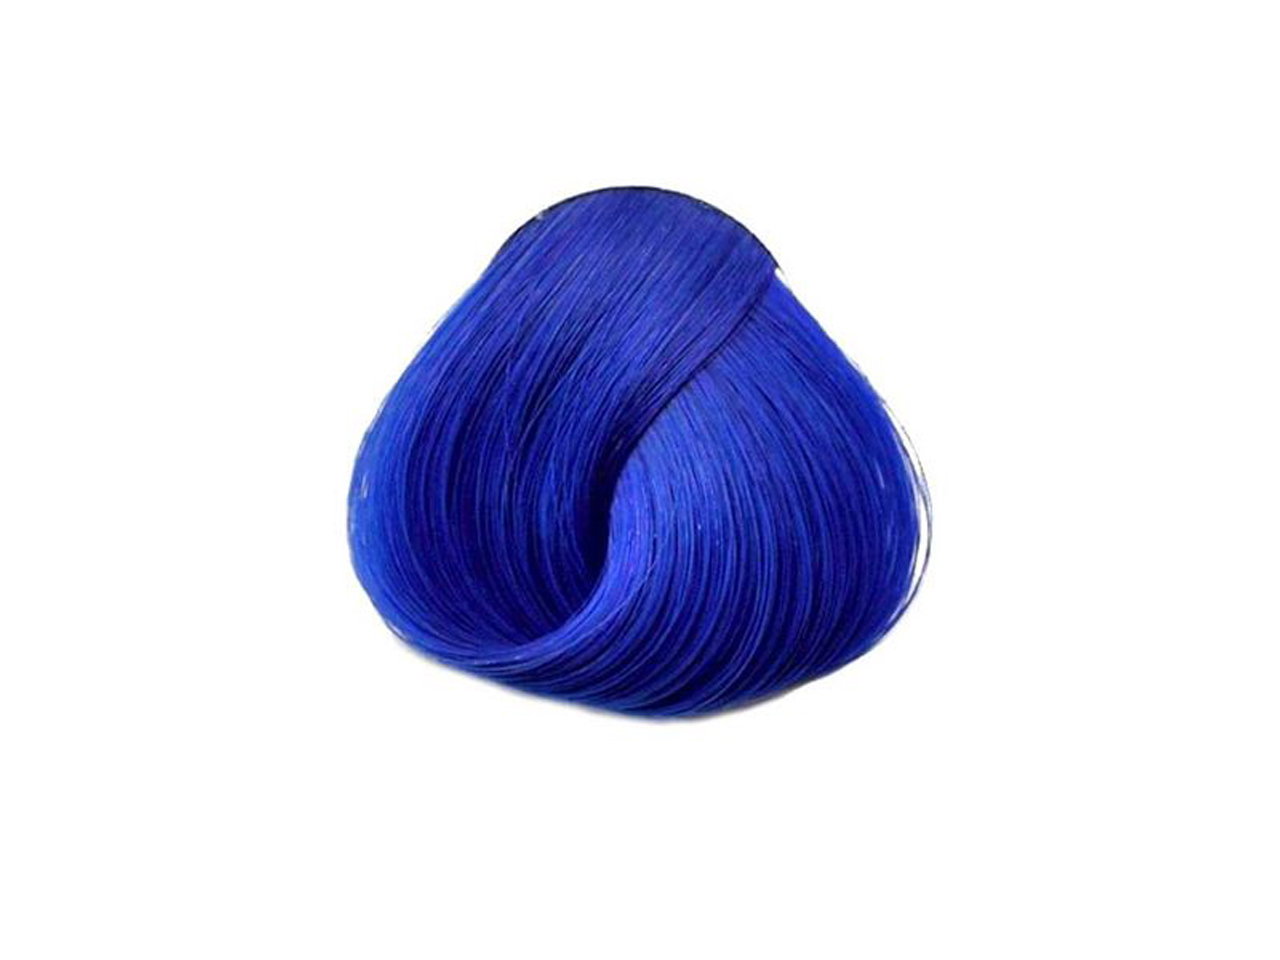 atlantic blue directions hair dye